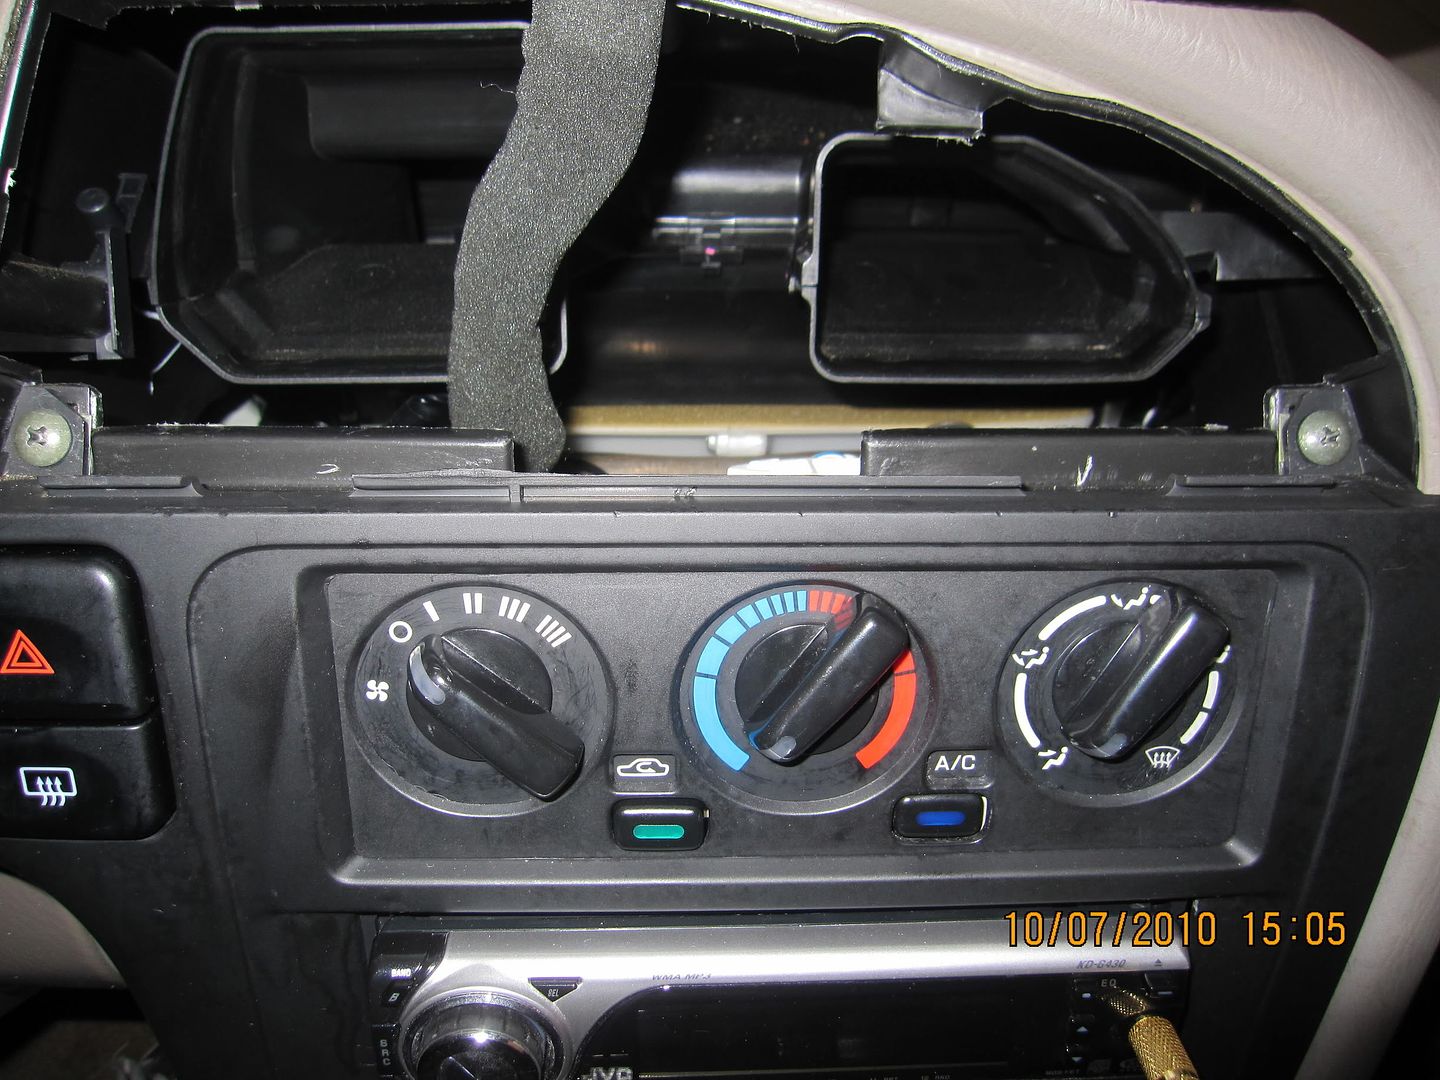 2004 Nissan pathfinder radio removal #2